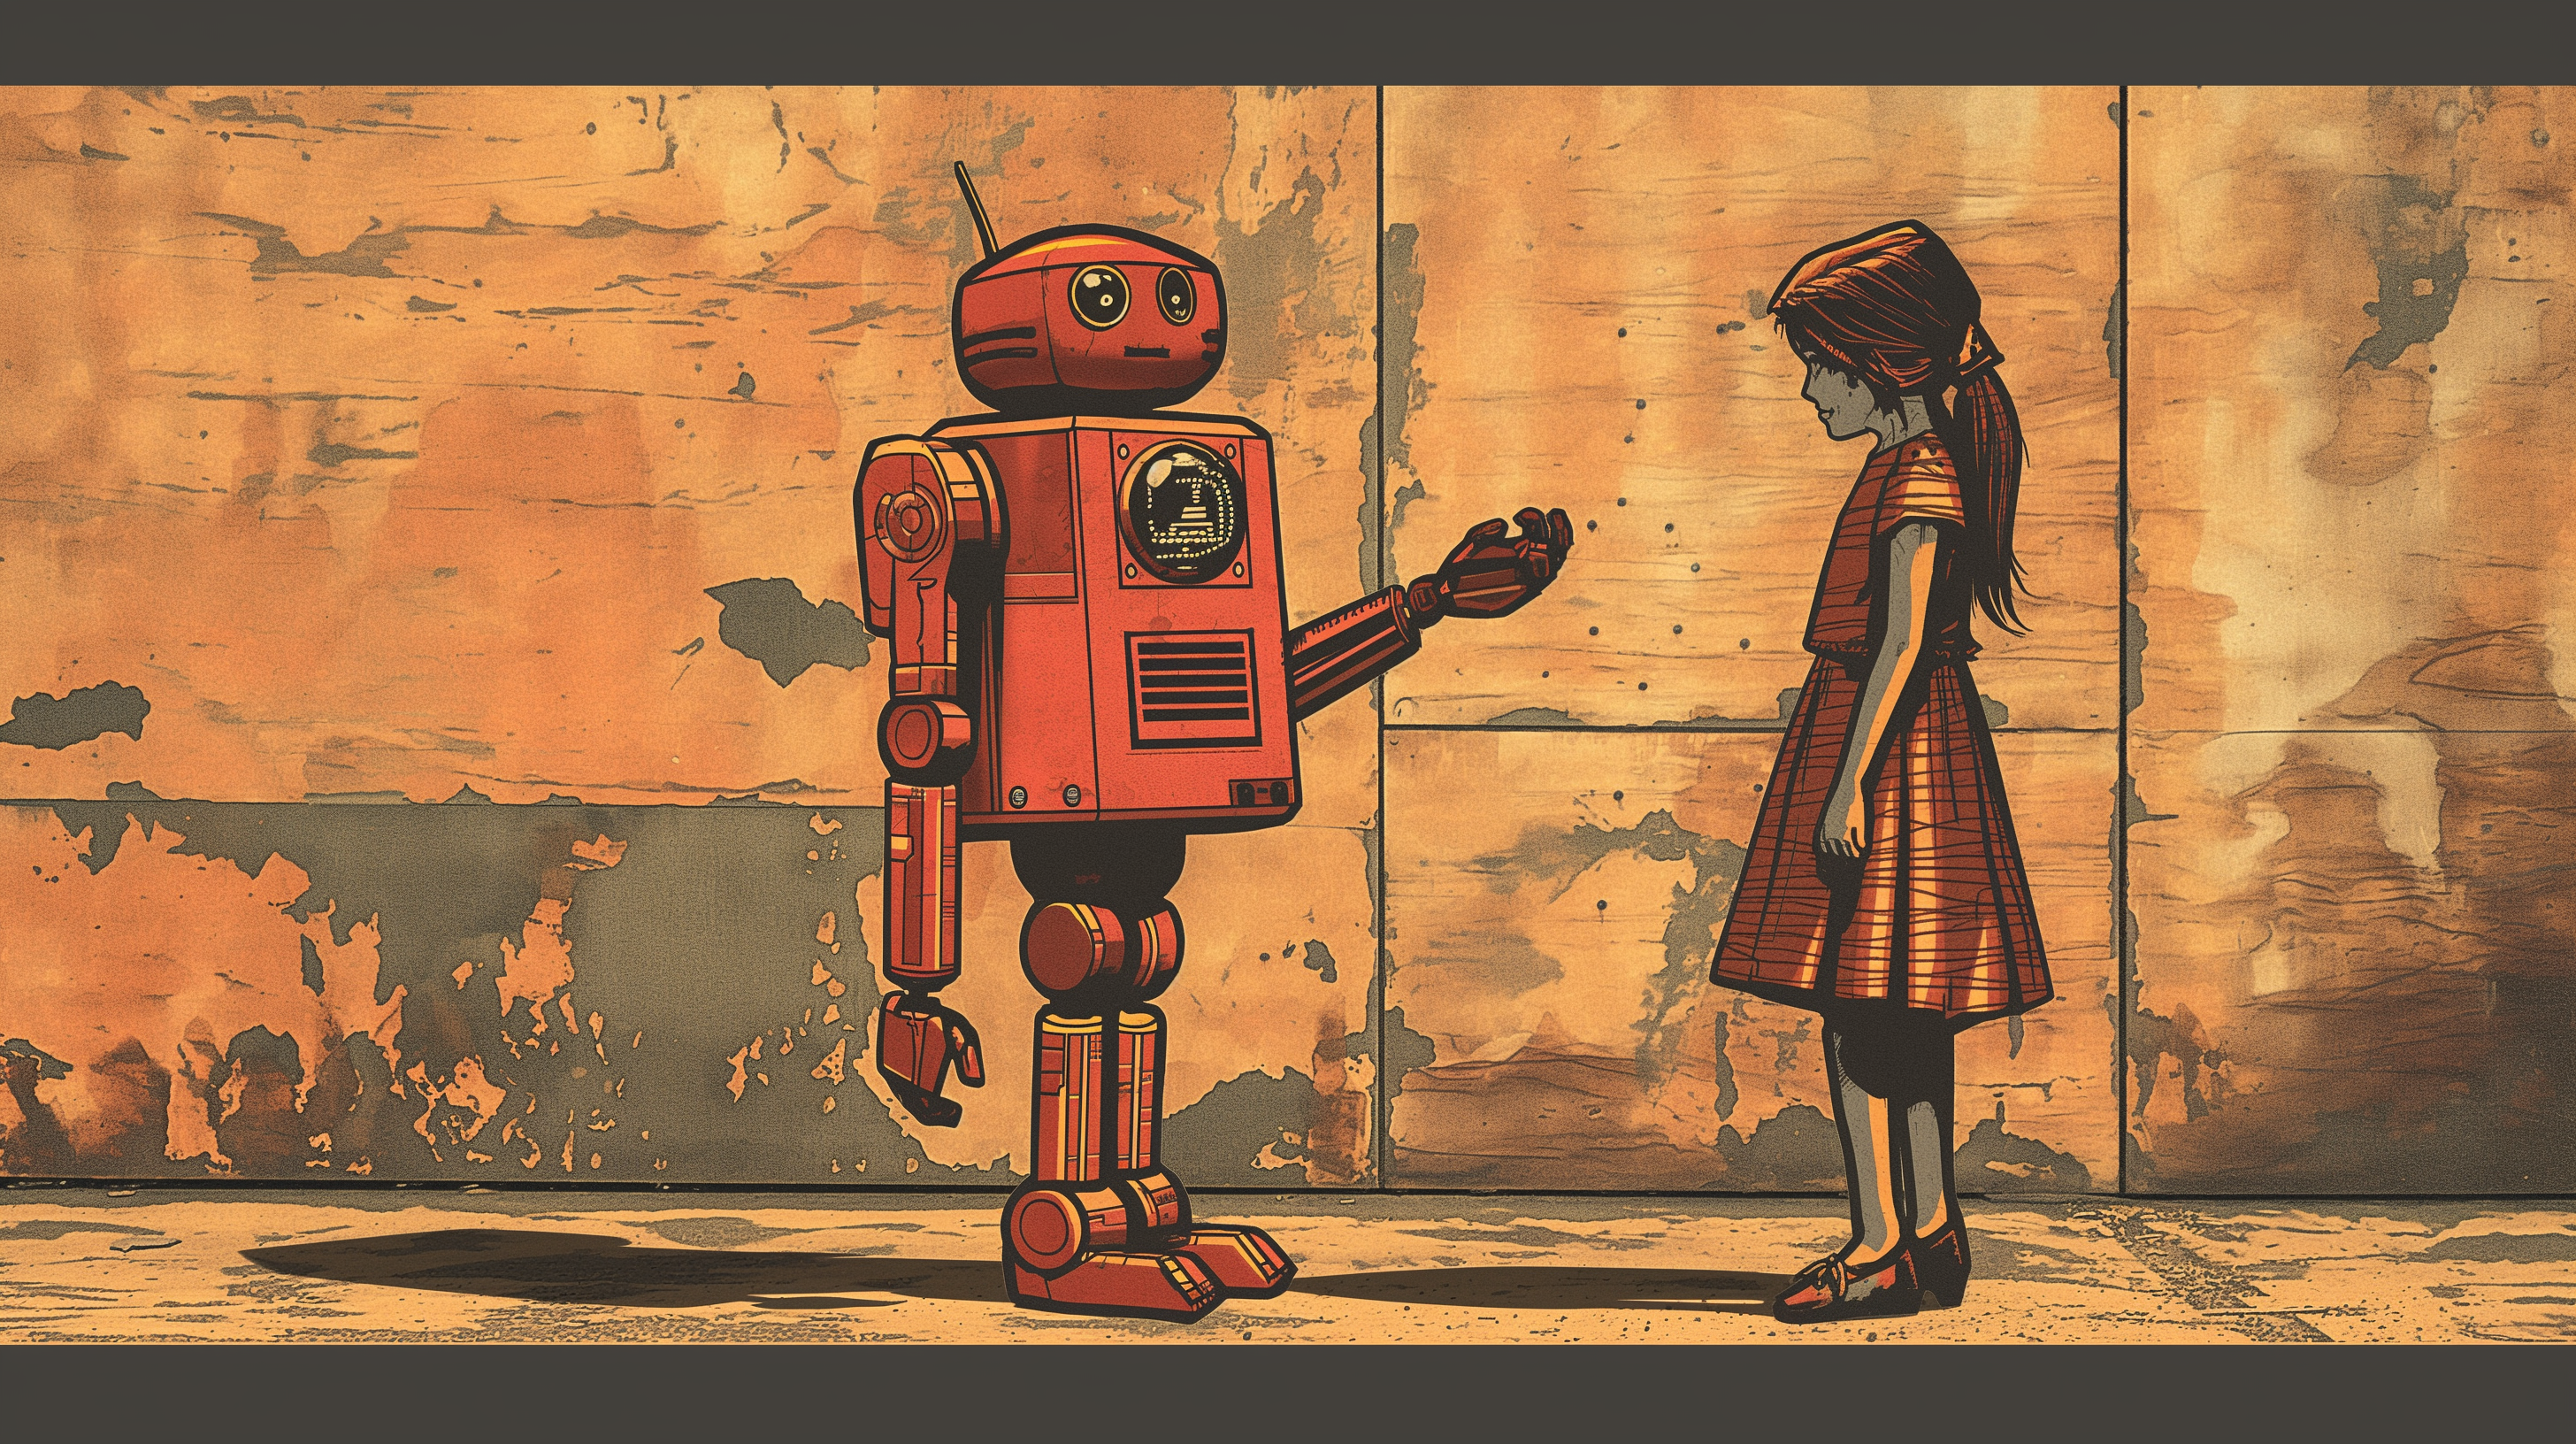 A robot talking to a little girl